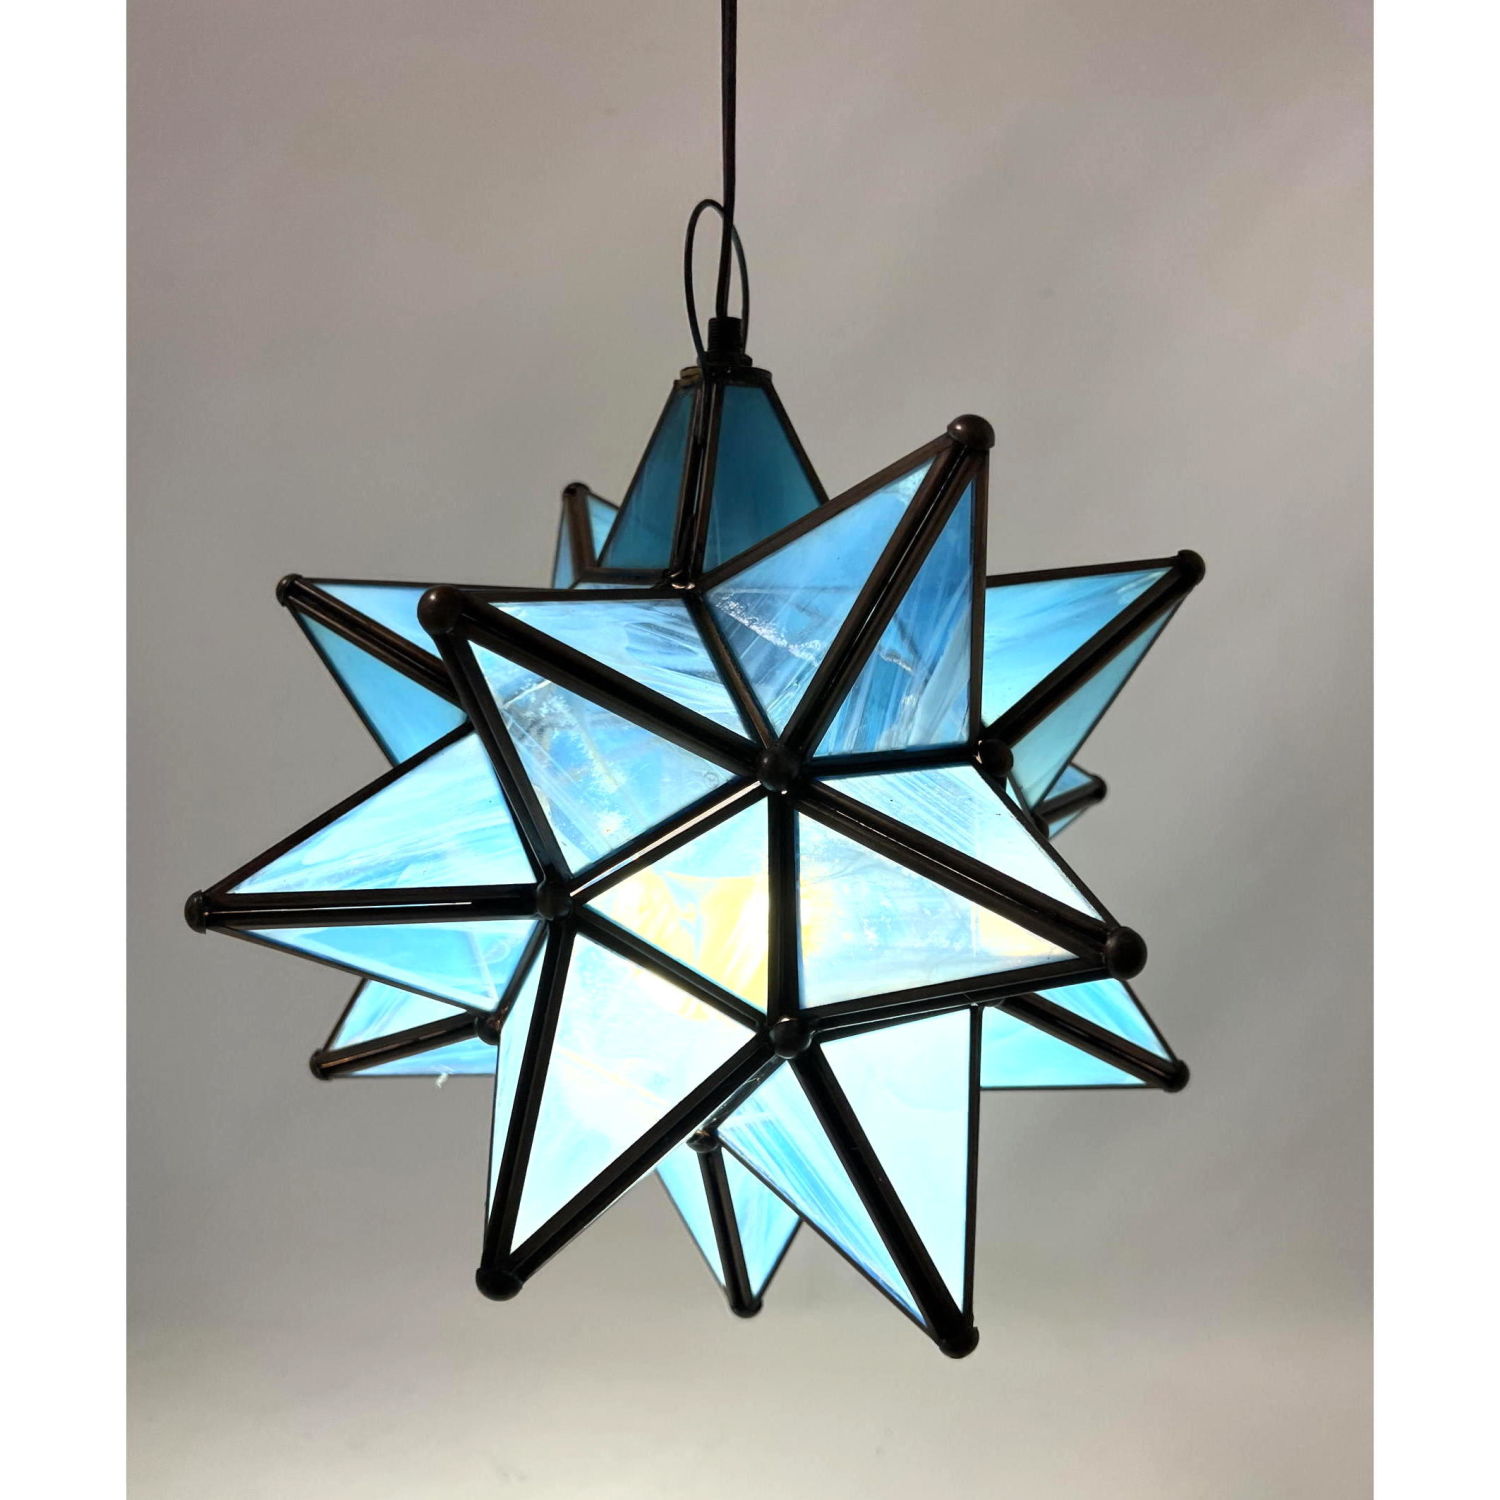 Blue glass star form pendant lamp.